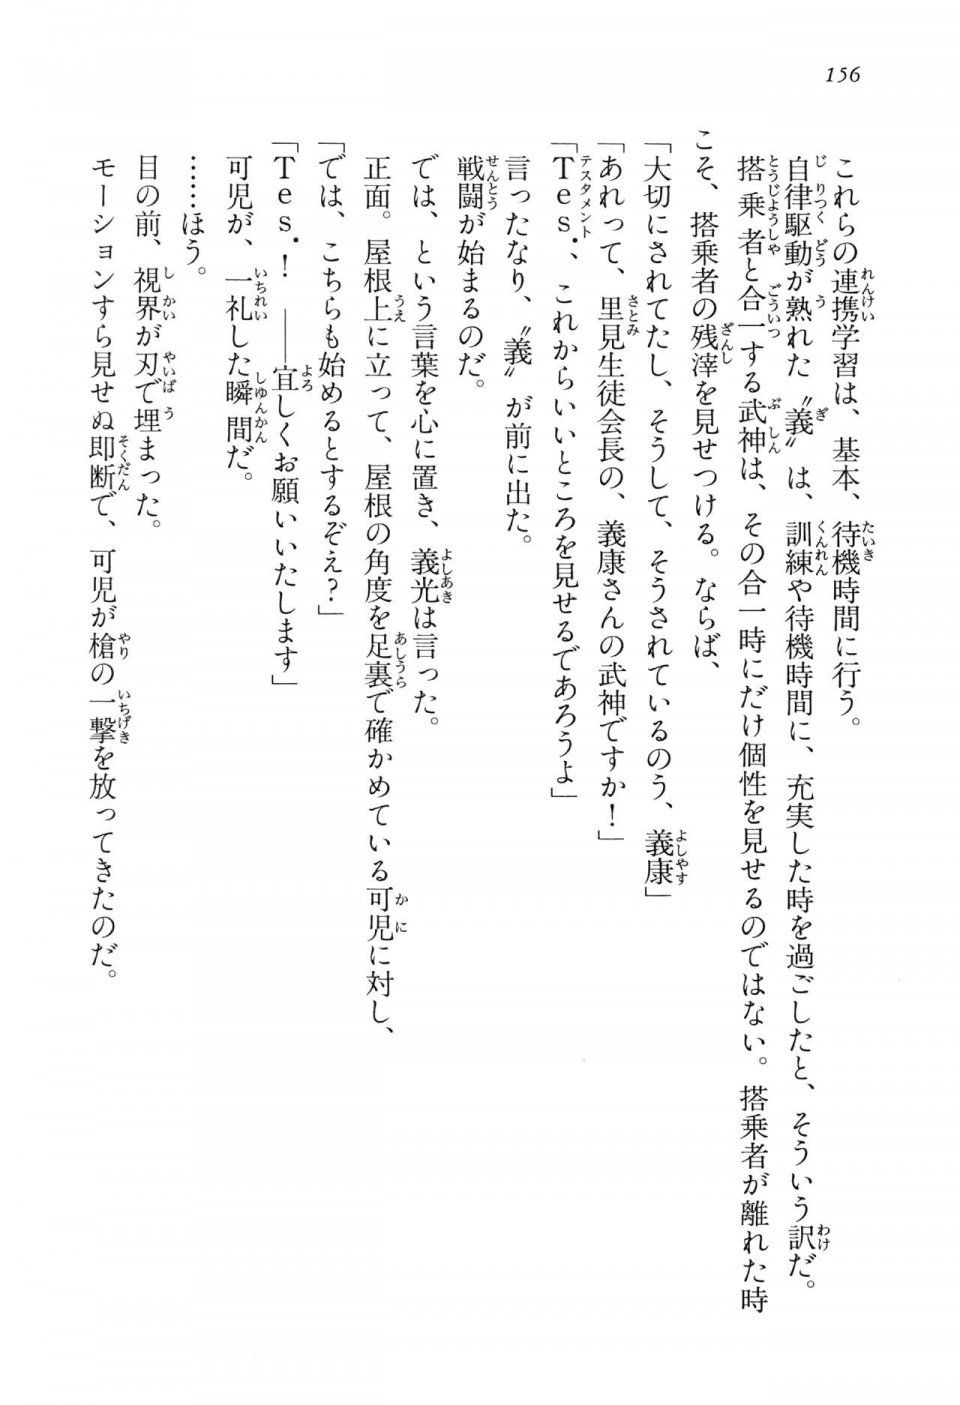 Kyoukai Senjou no Horizon LN Vol 15(6C) Part 1 - Photo #156